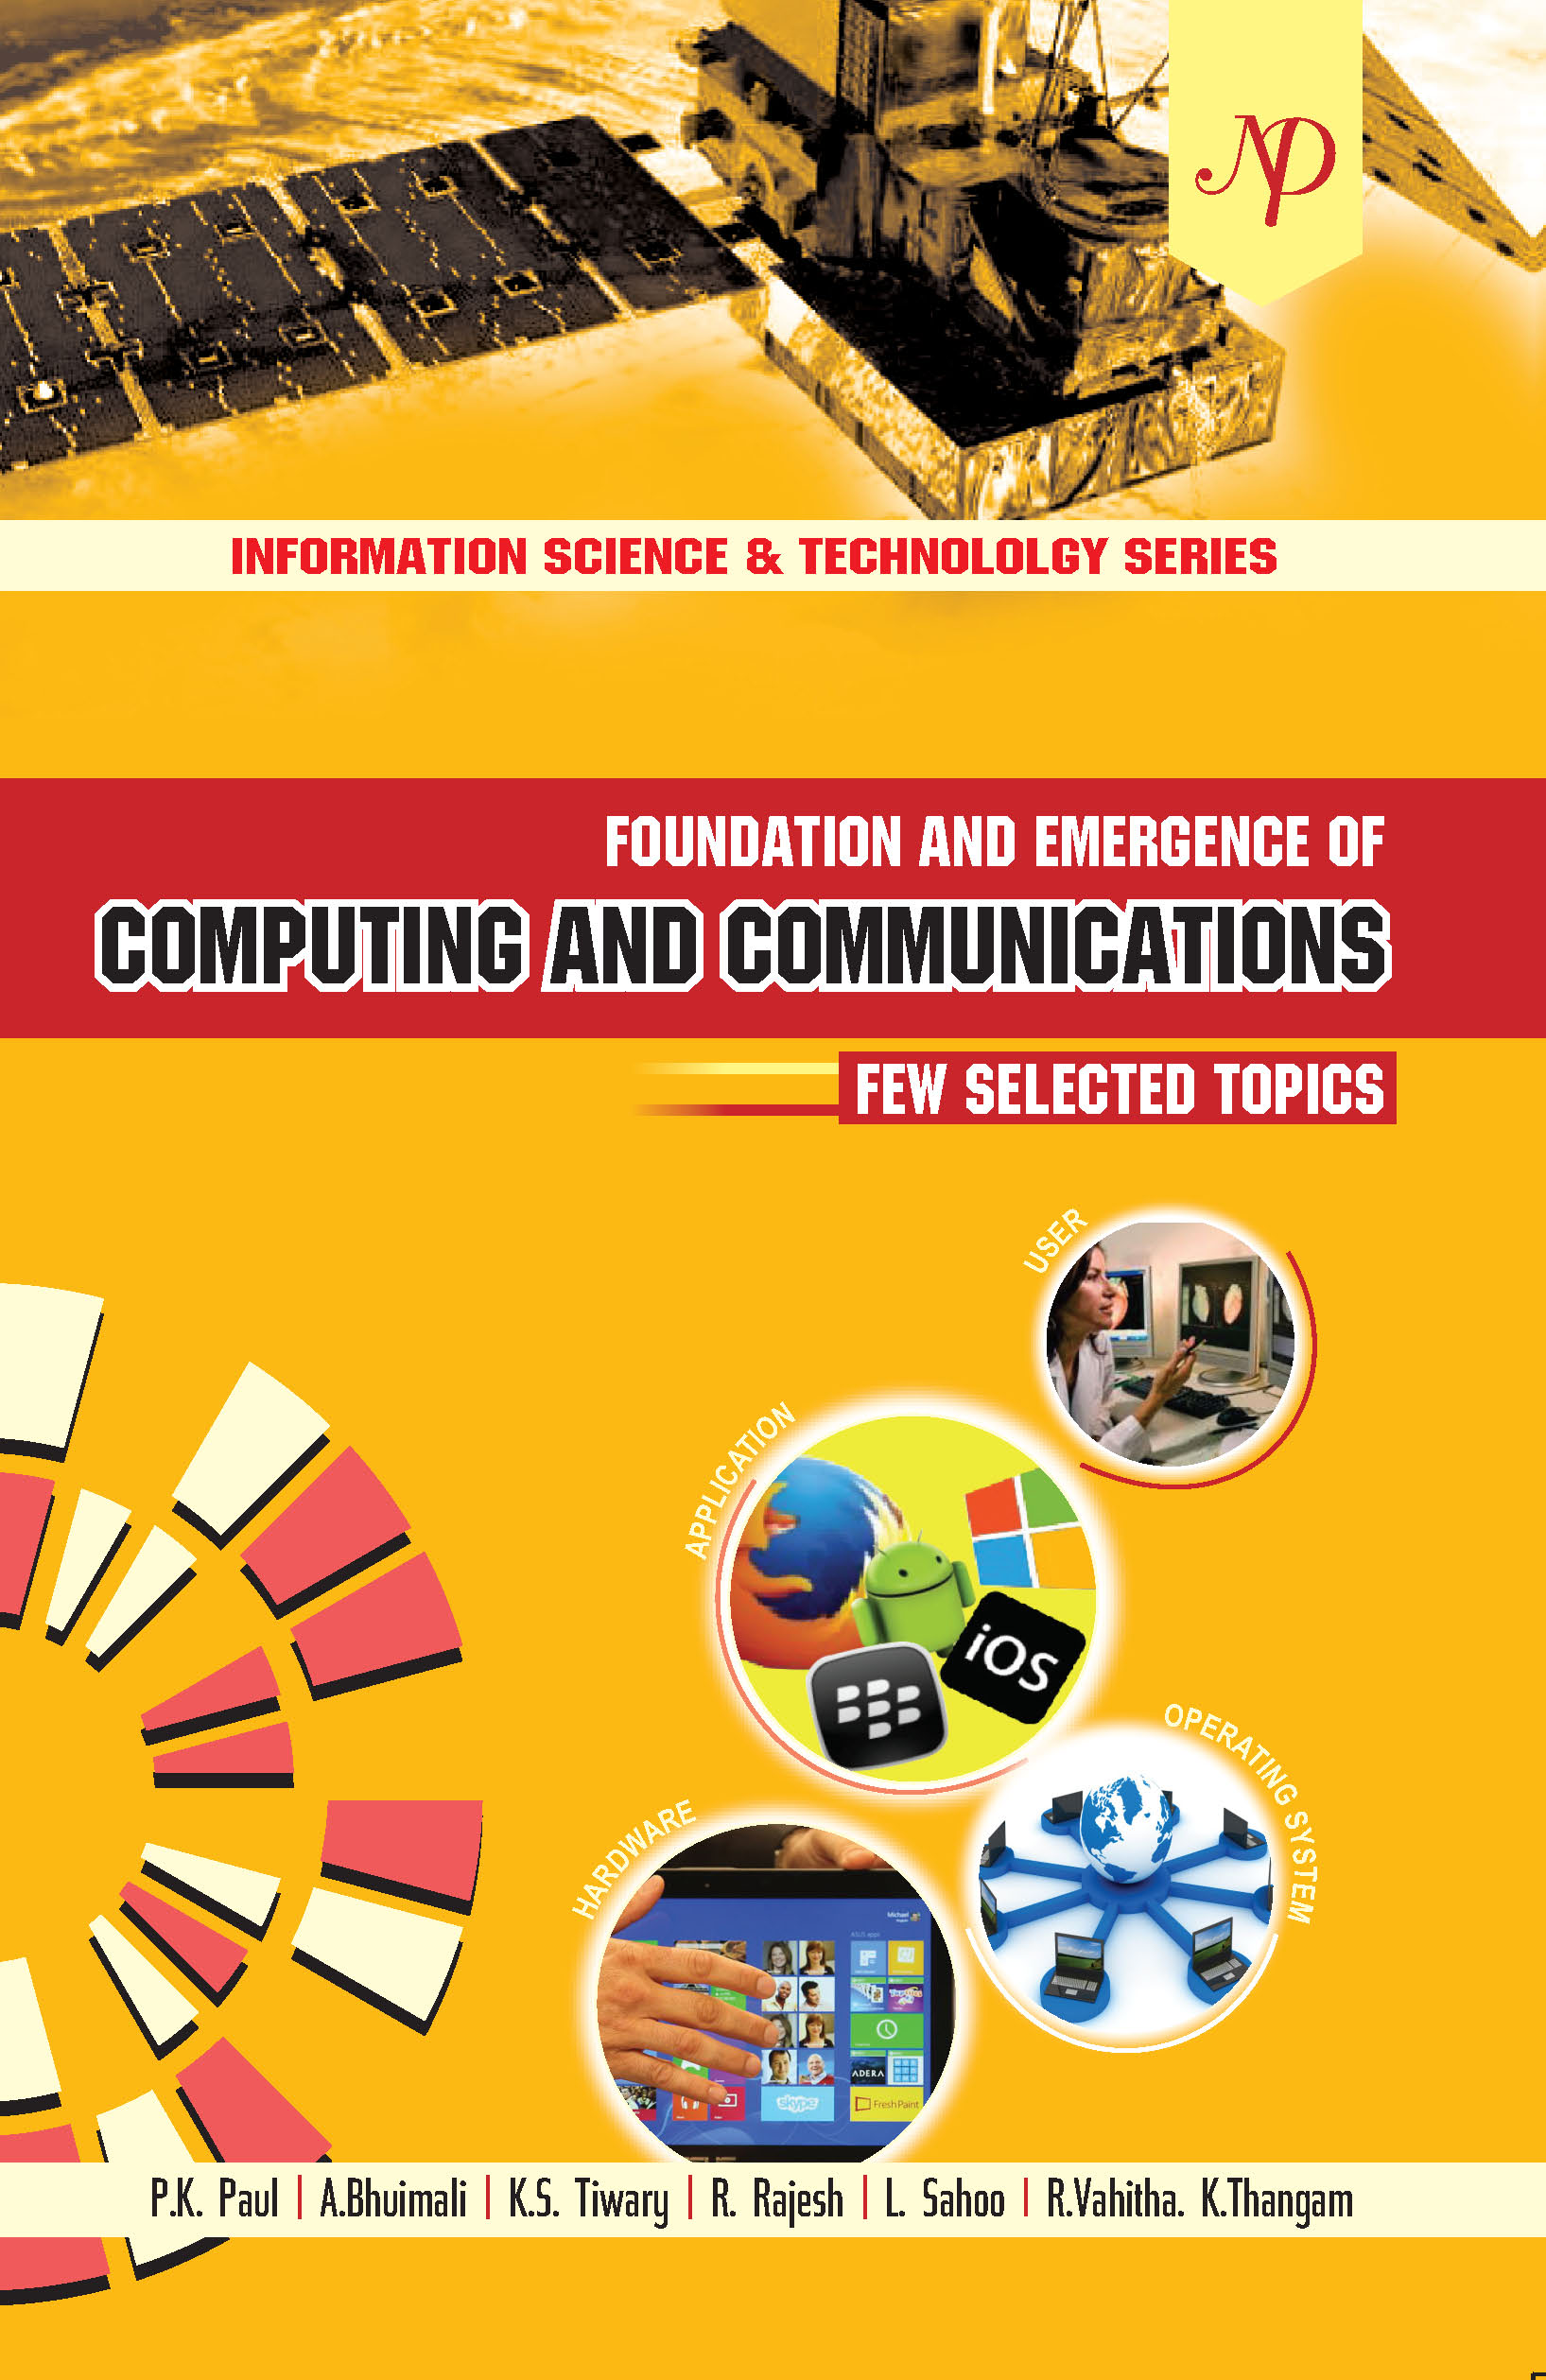 Computing and communication series.jpg